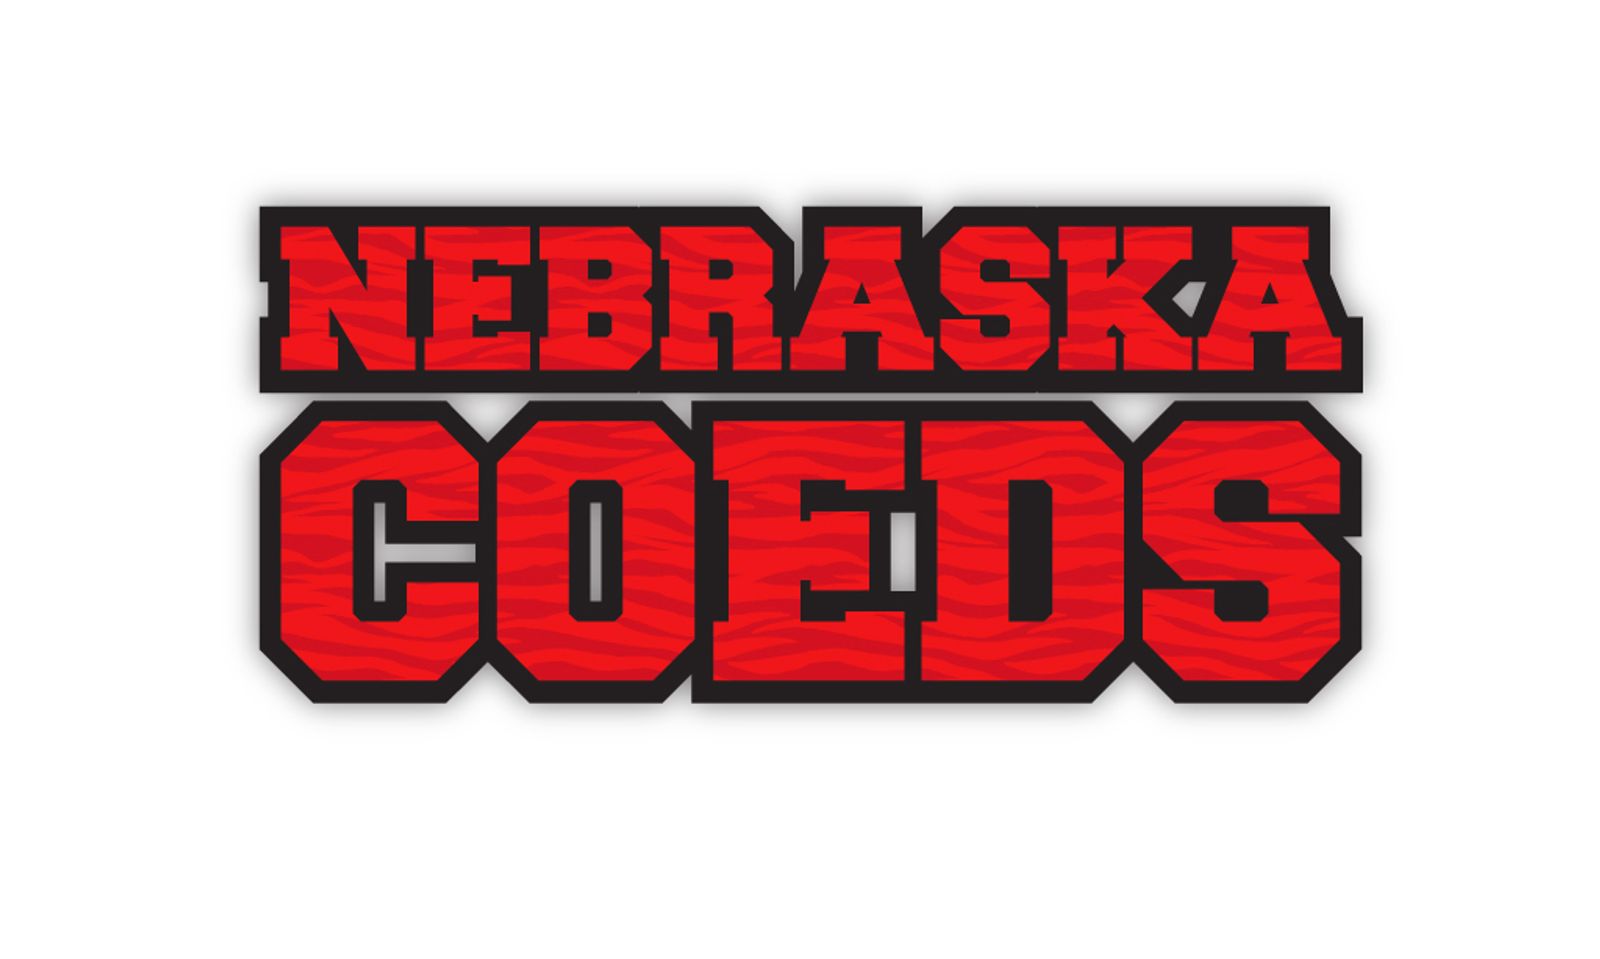 NebraskaCoeds.com, 4 Other Sites Join New Network